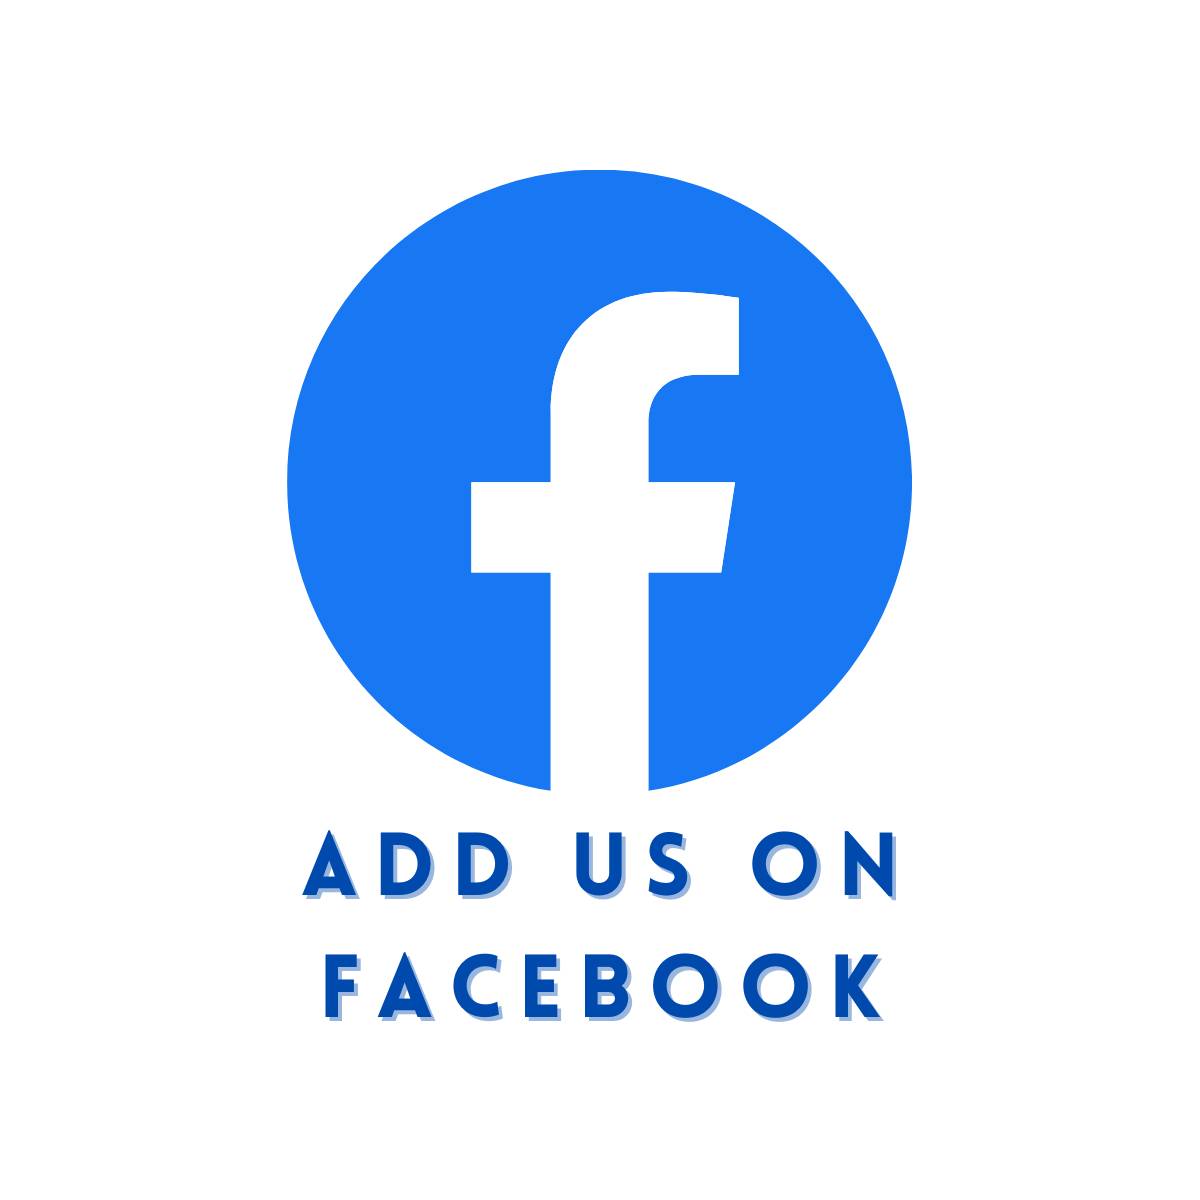 Add us on facebook